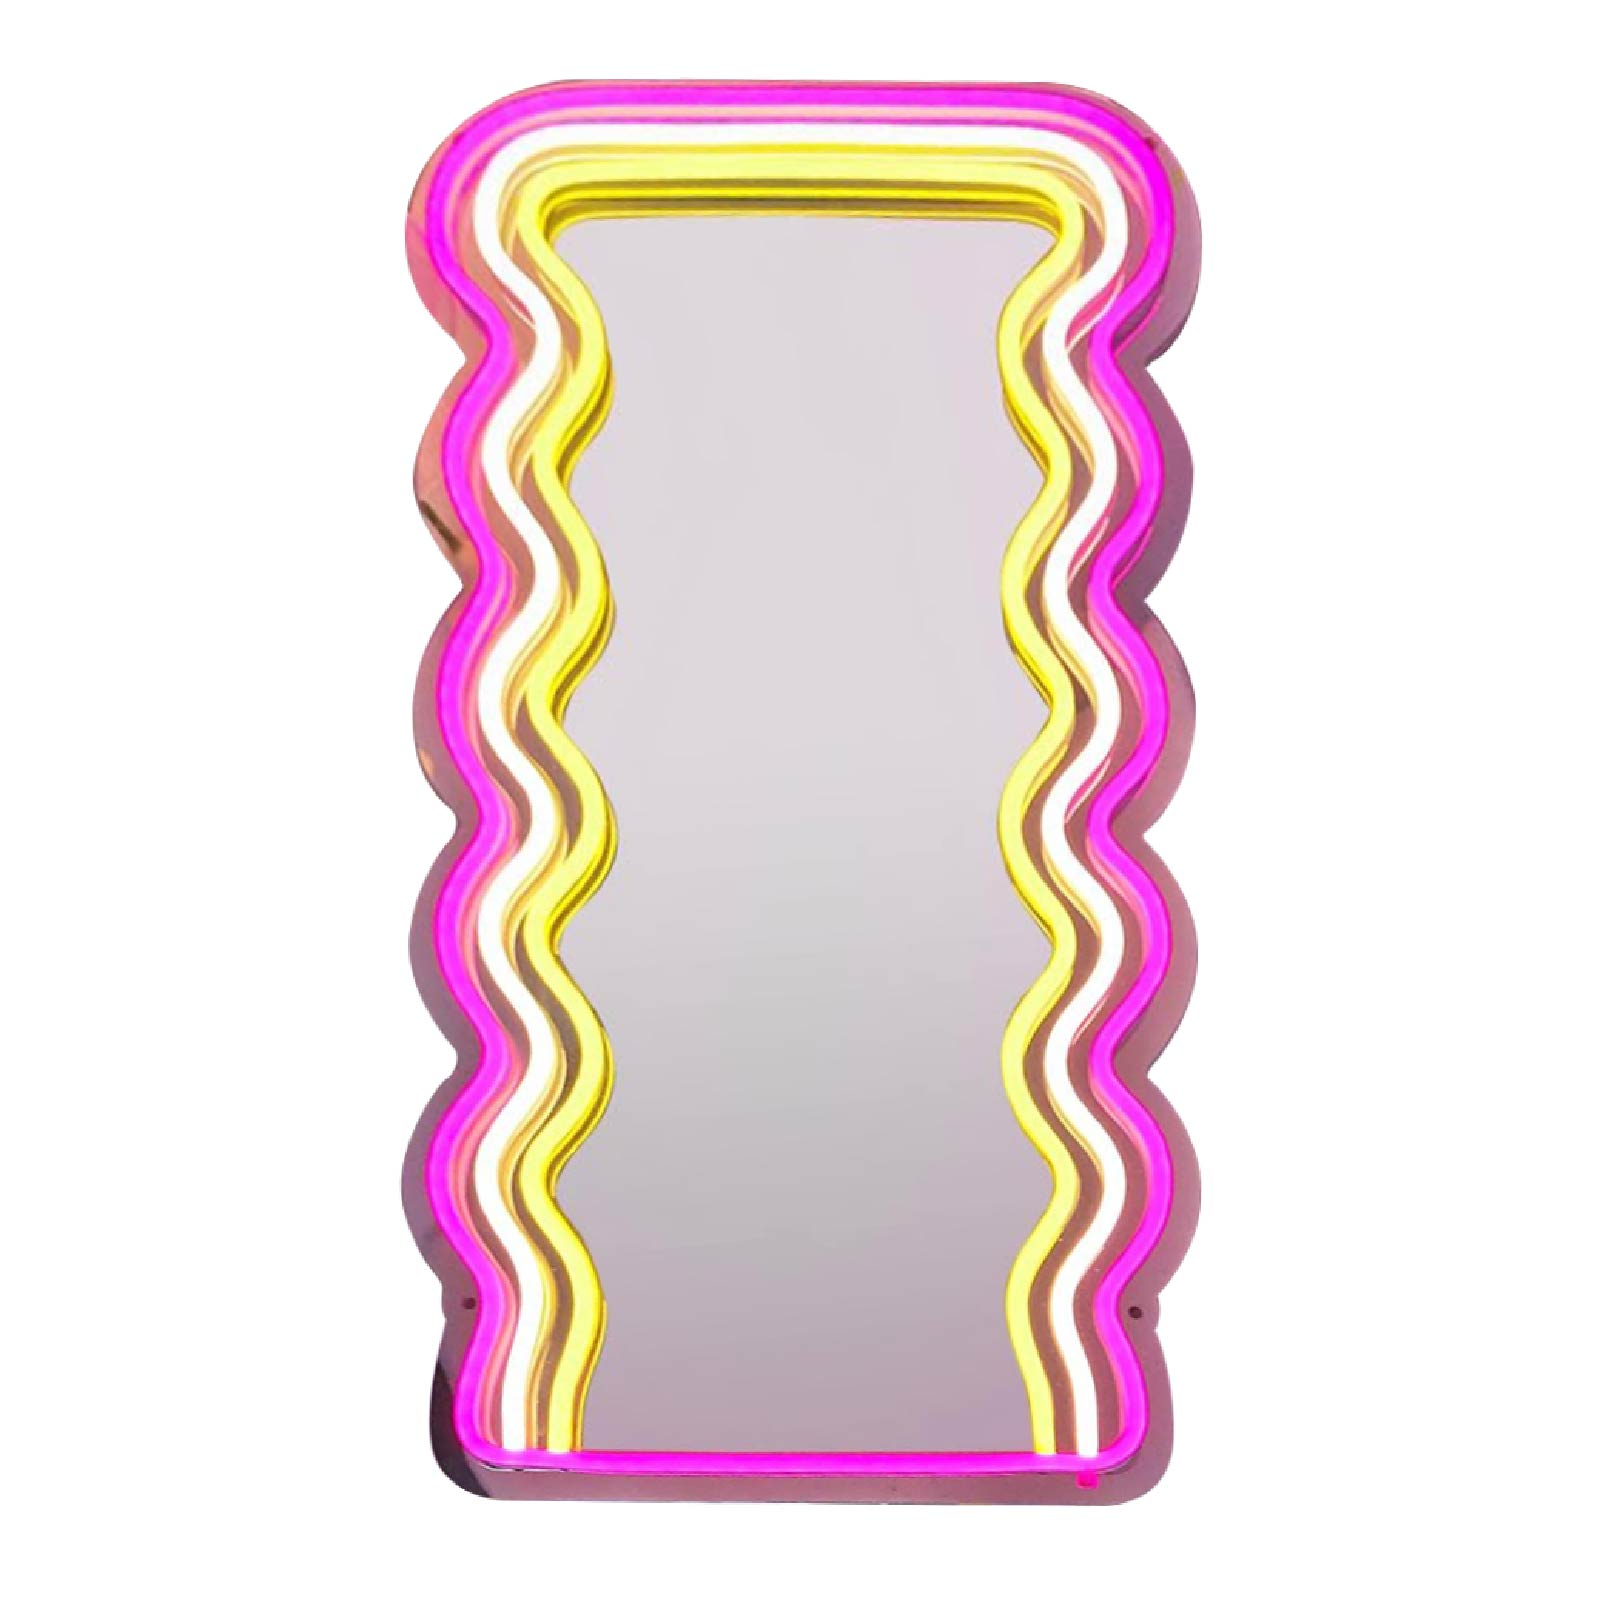 Wavy Neon Mirror for Wall Decor USB Powered